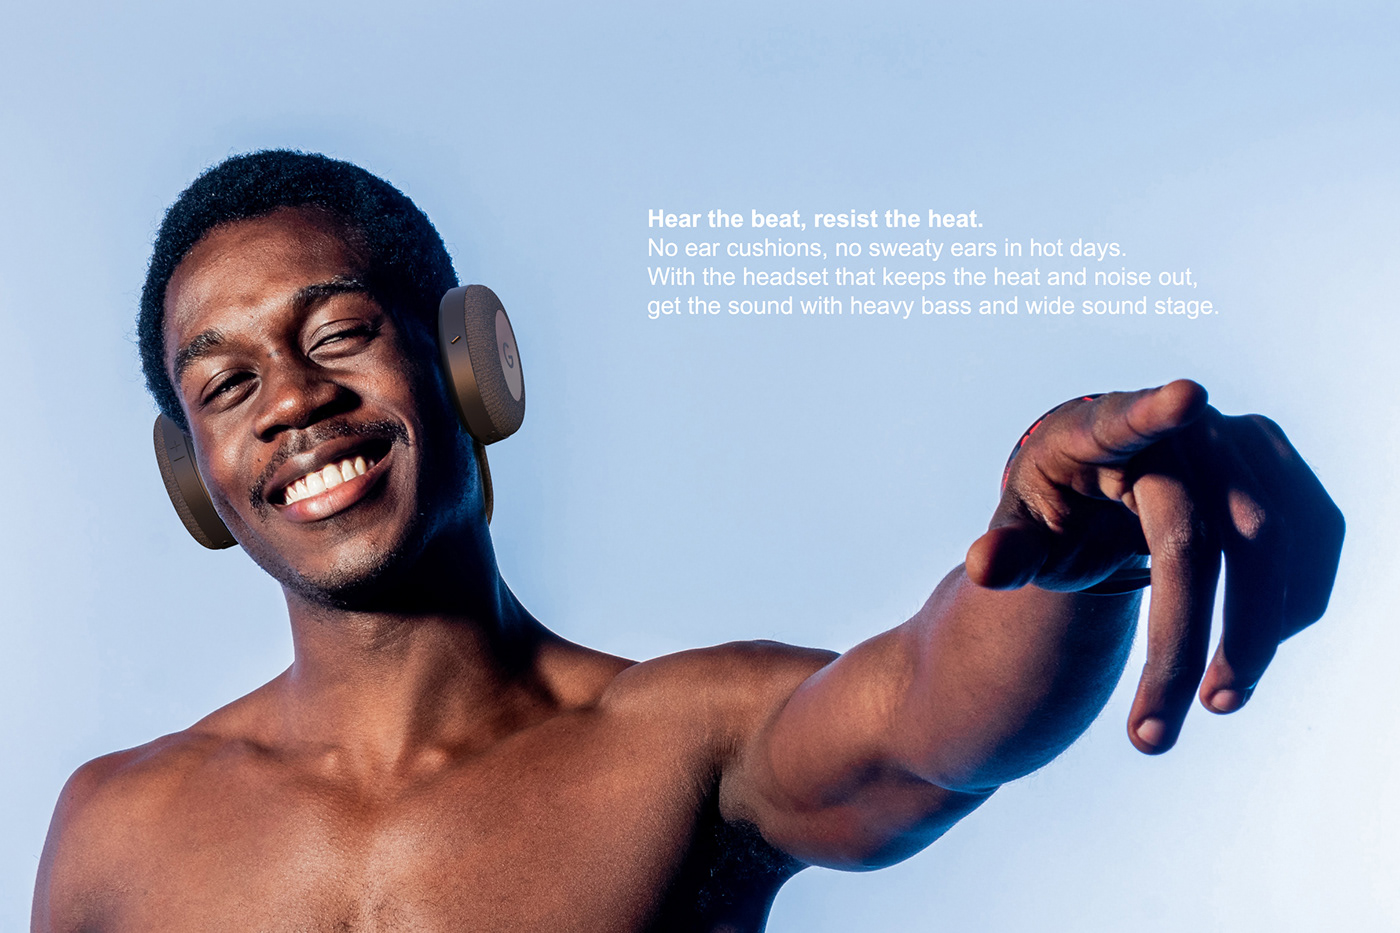 darko nikolic Glasom headphones headset Innovative minimalist Smart headset tech Wearable